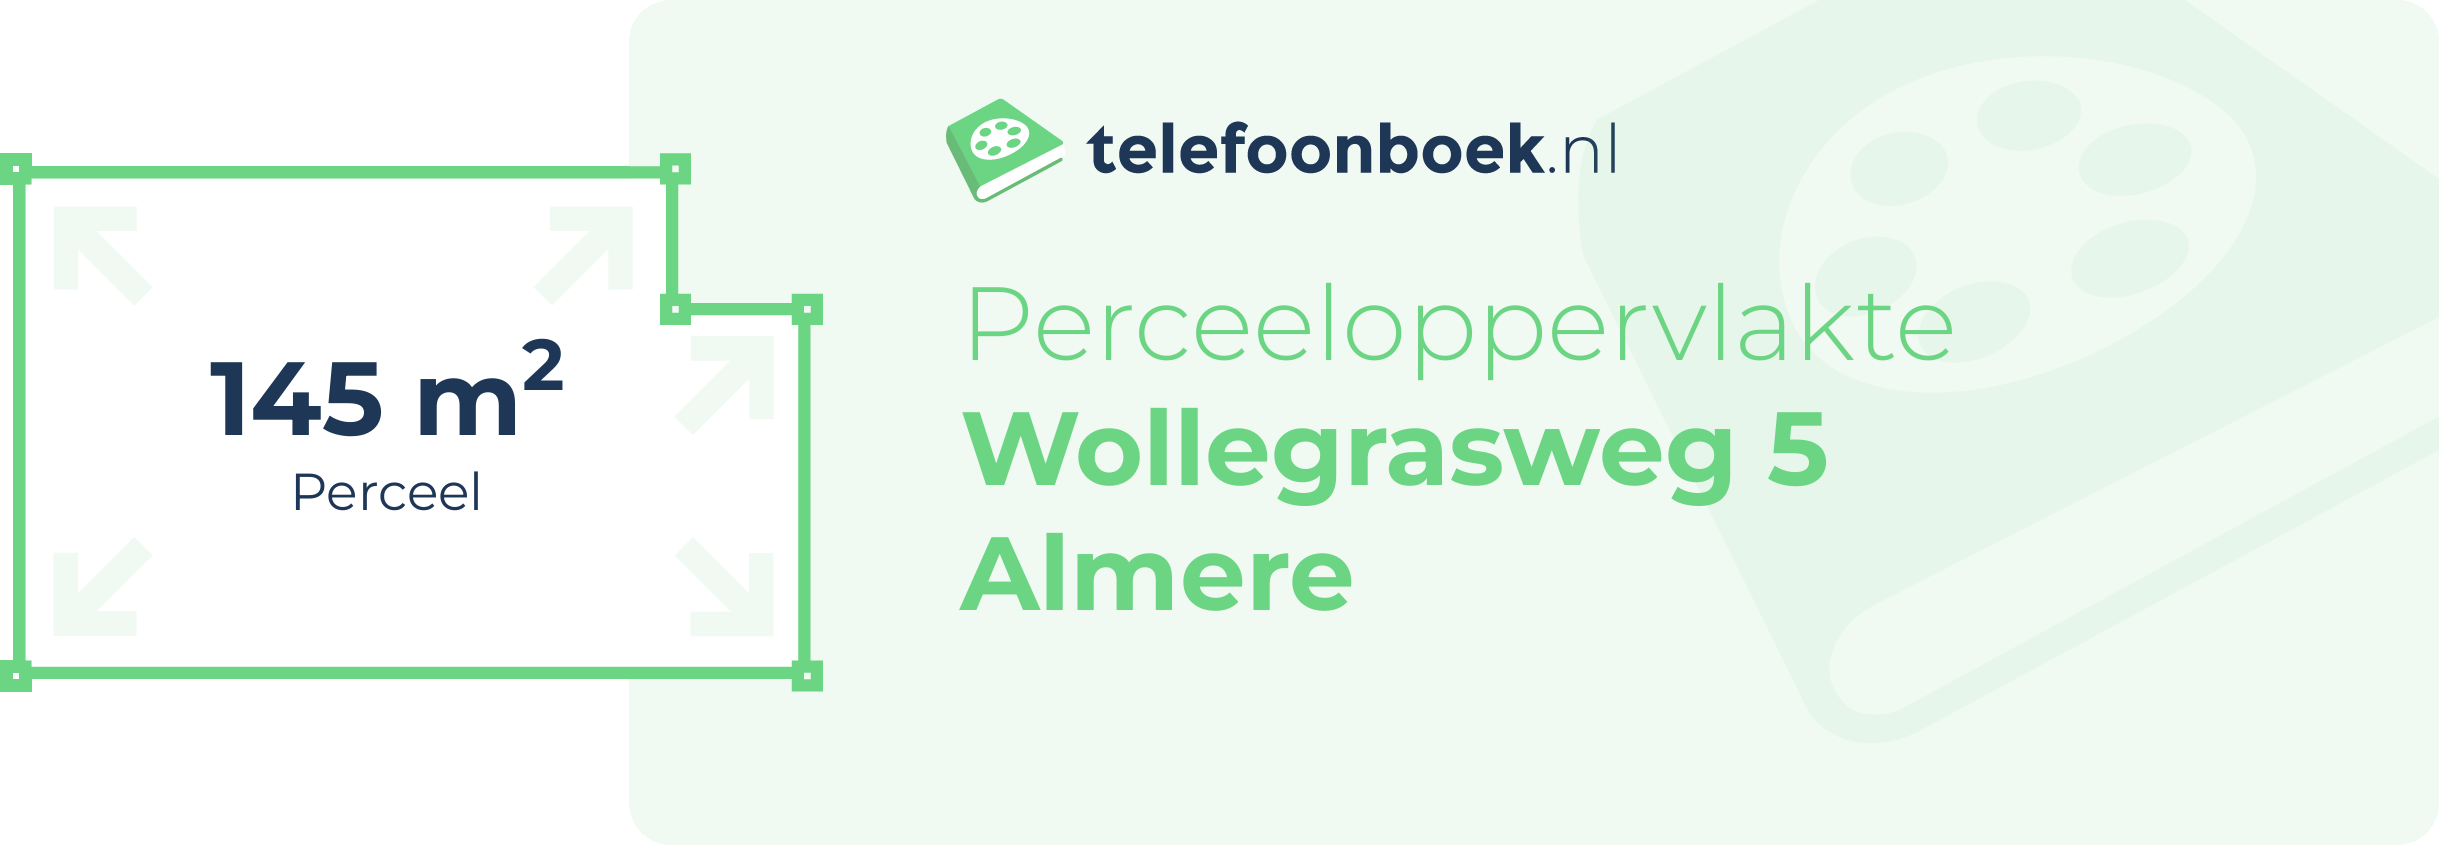 Perceeloppervlakte Wollegrasweg 5 Almere